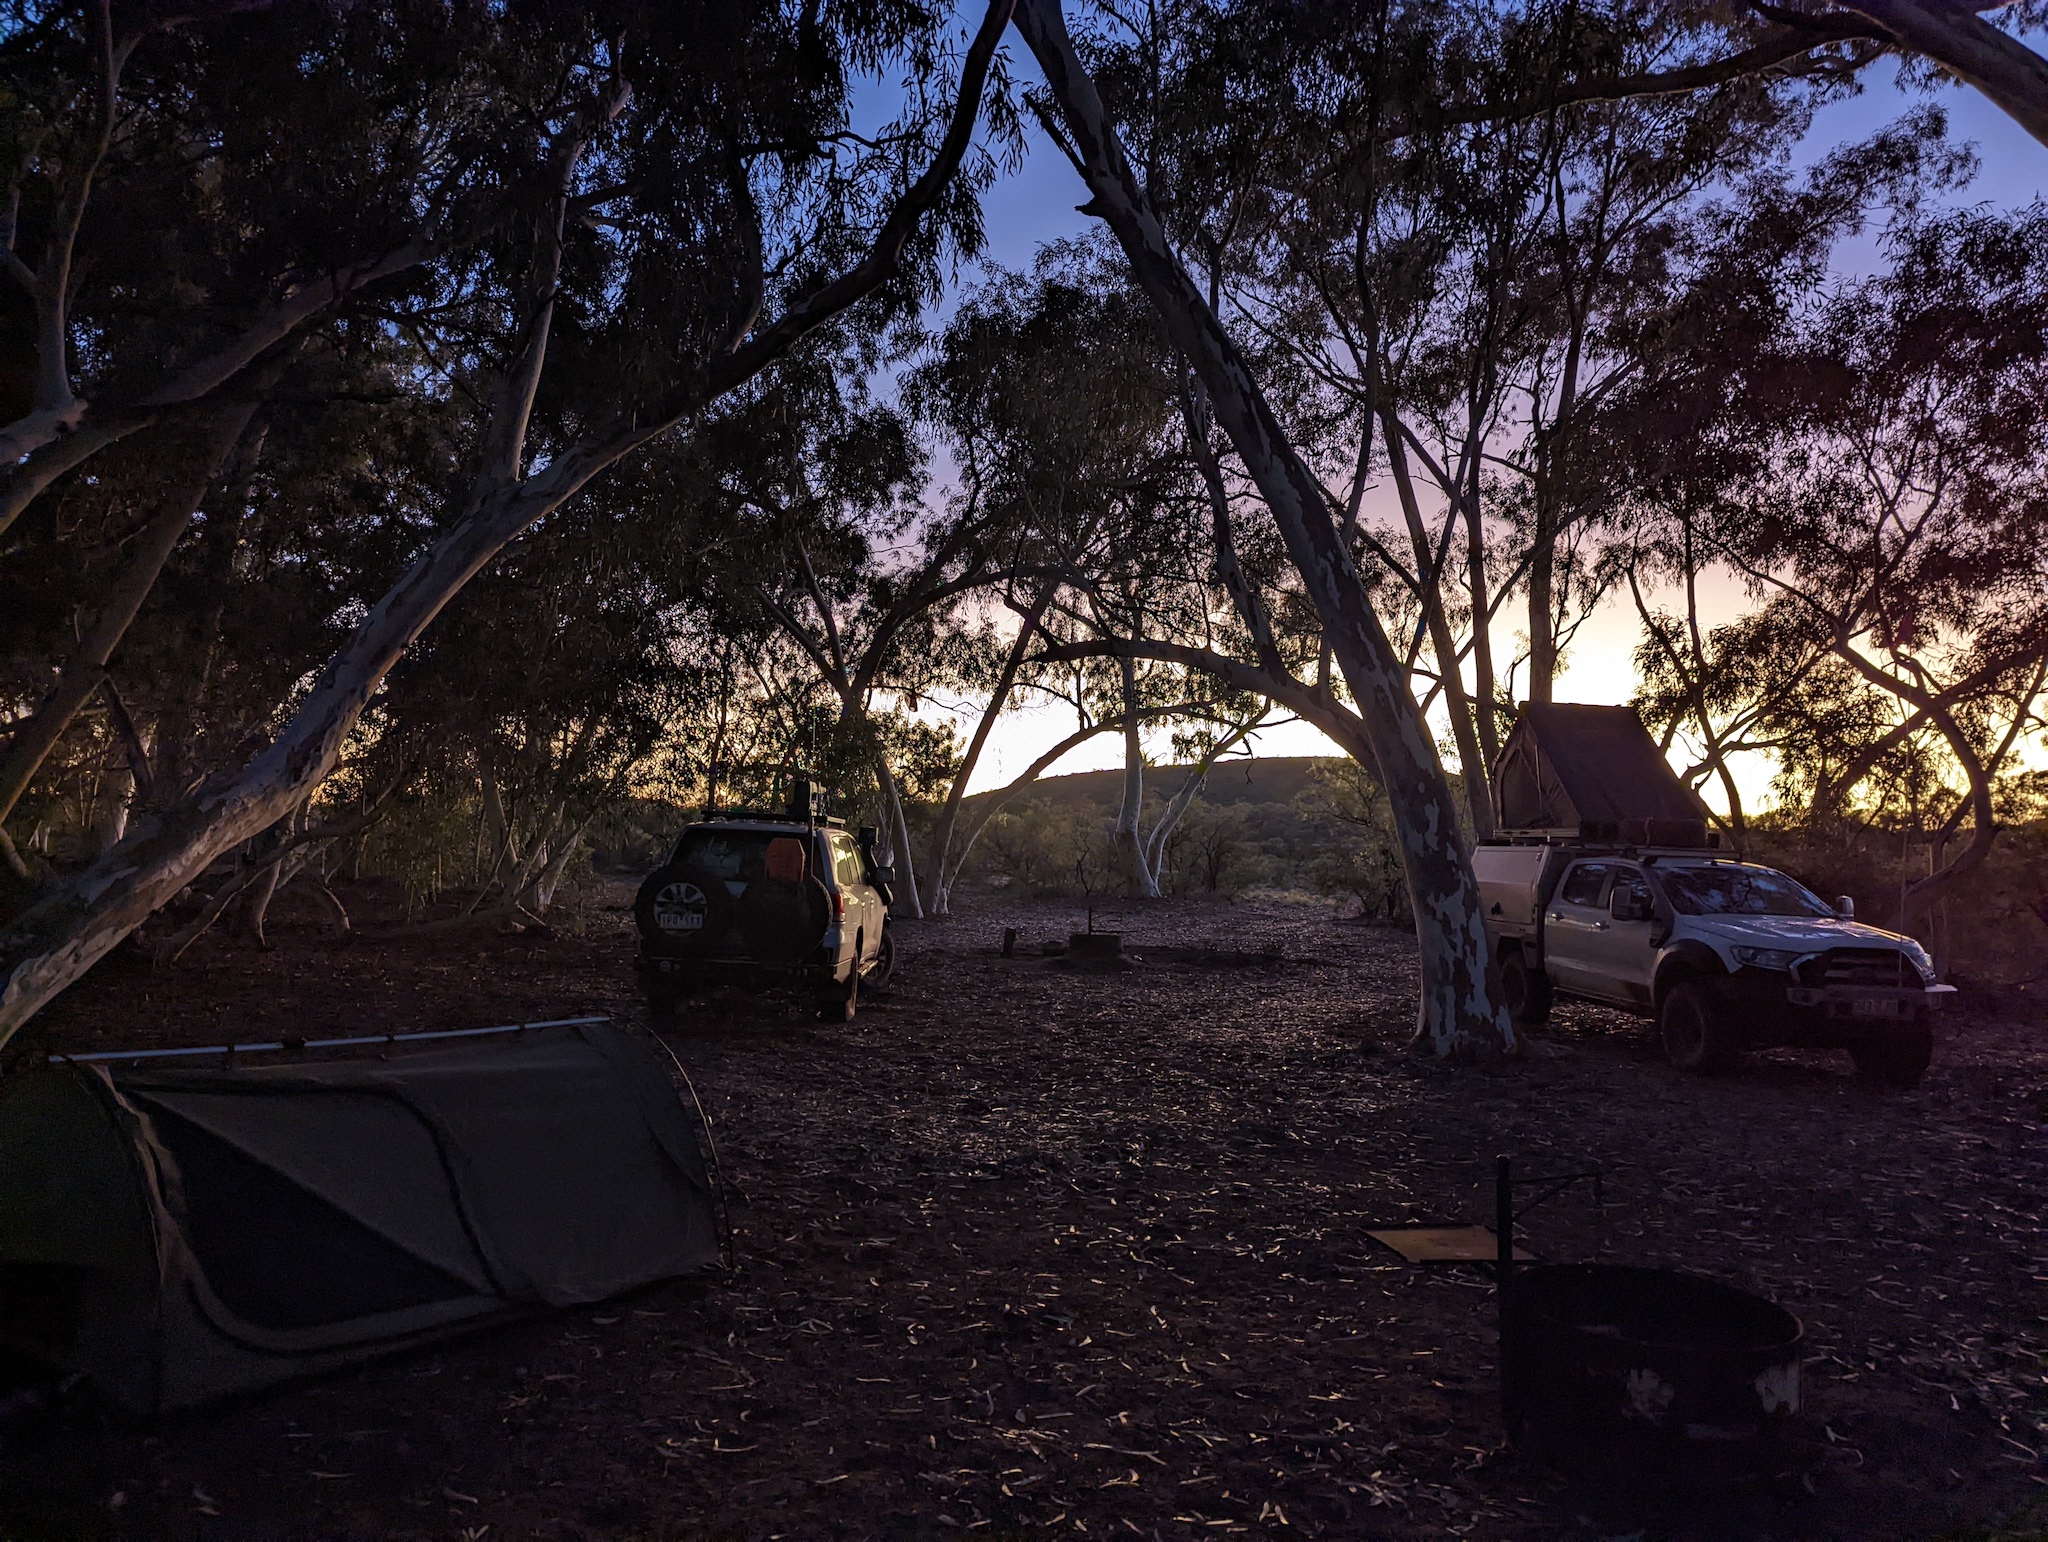 Milyinirri/Well 6 and camping area